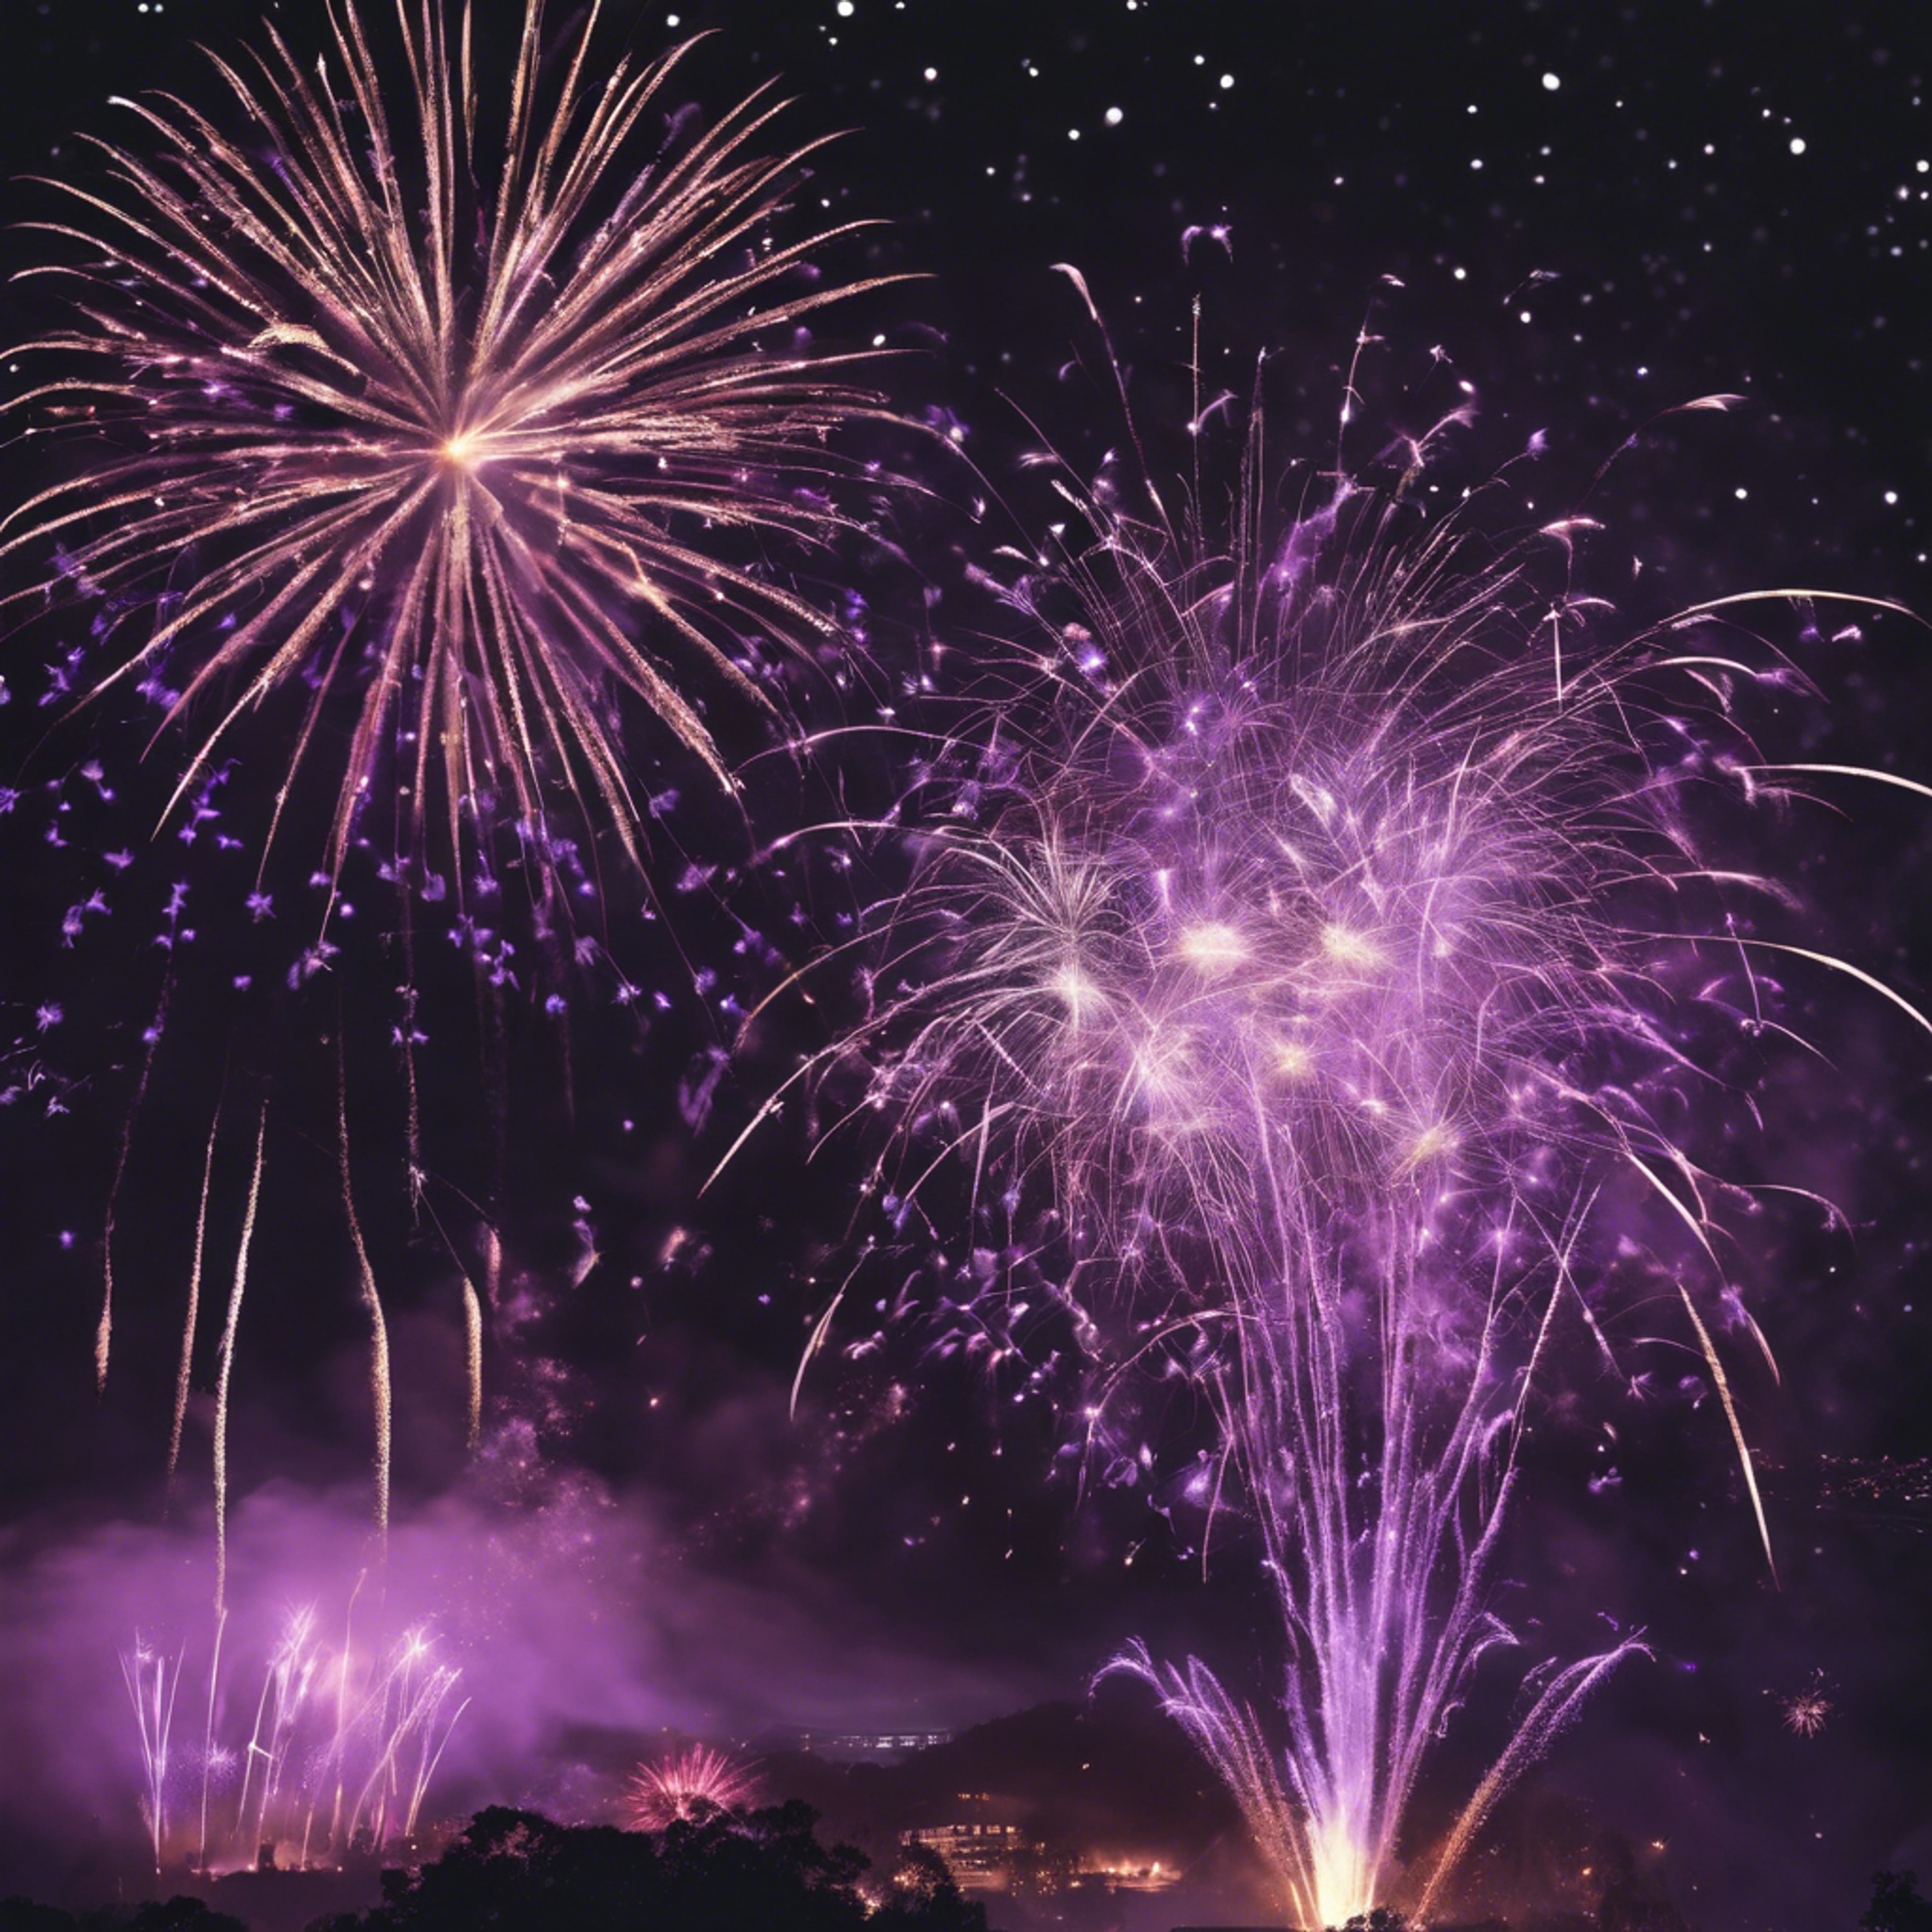 Black and purple fireworks lighting up the night sky during a grand celebration. Tapeta[a63540e6fc8e4a549ec0]